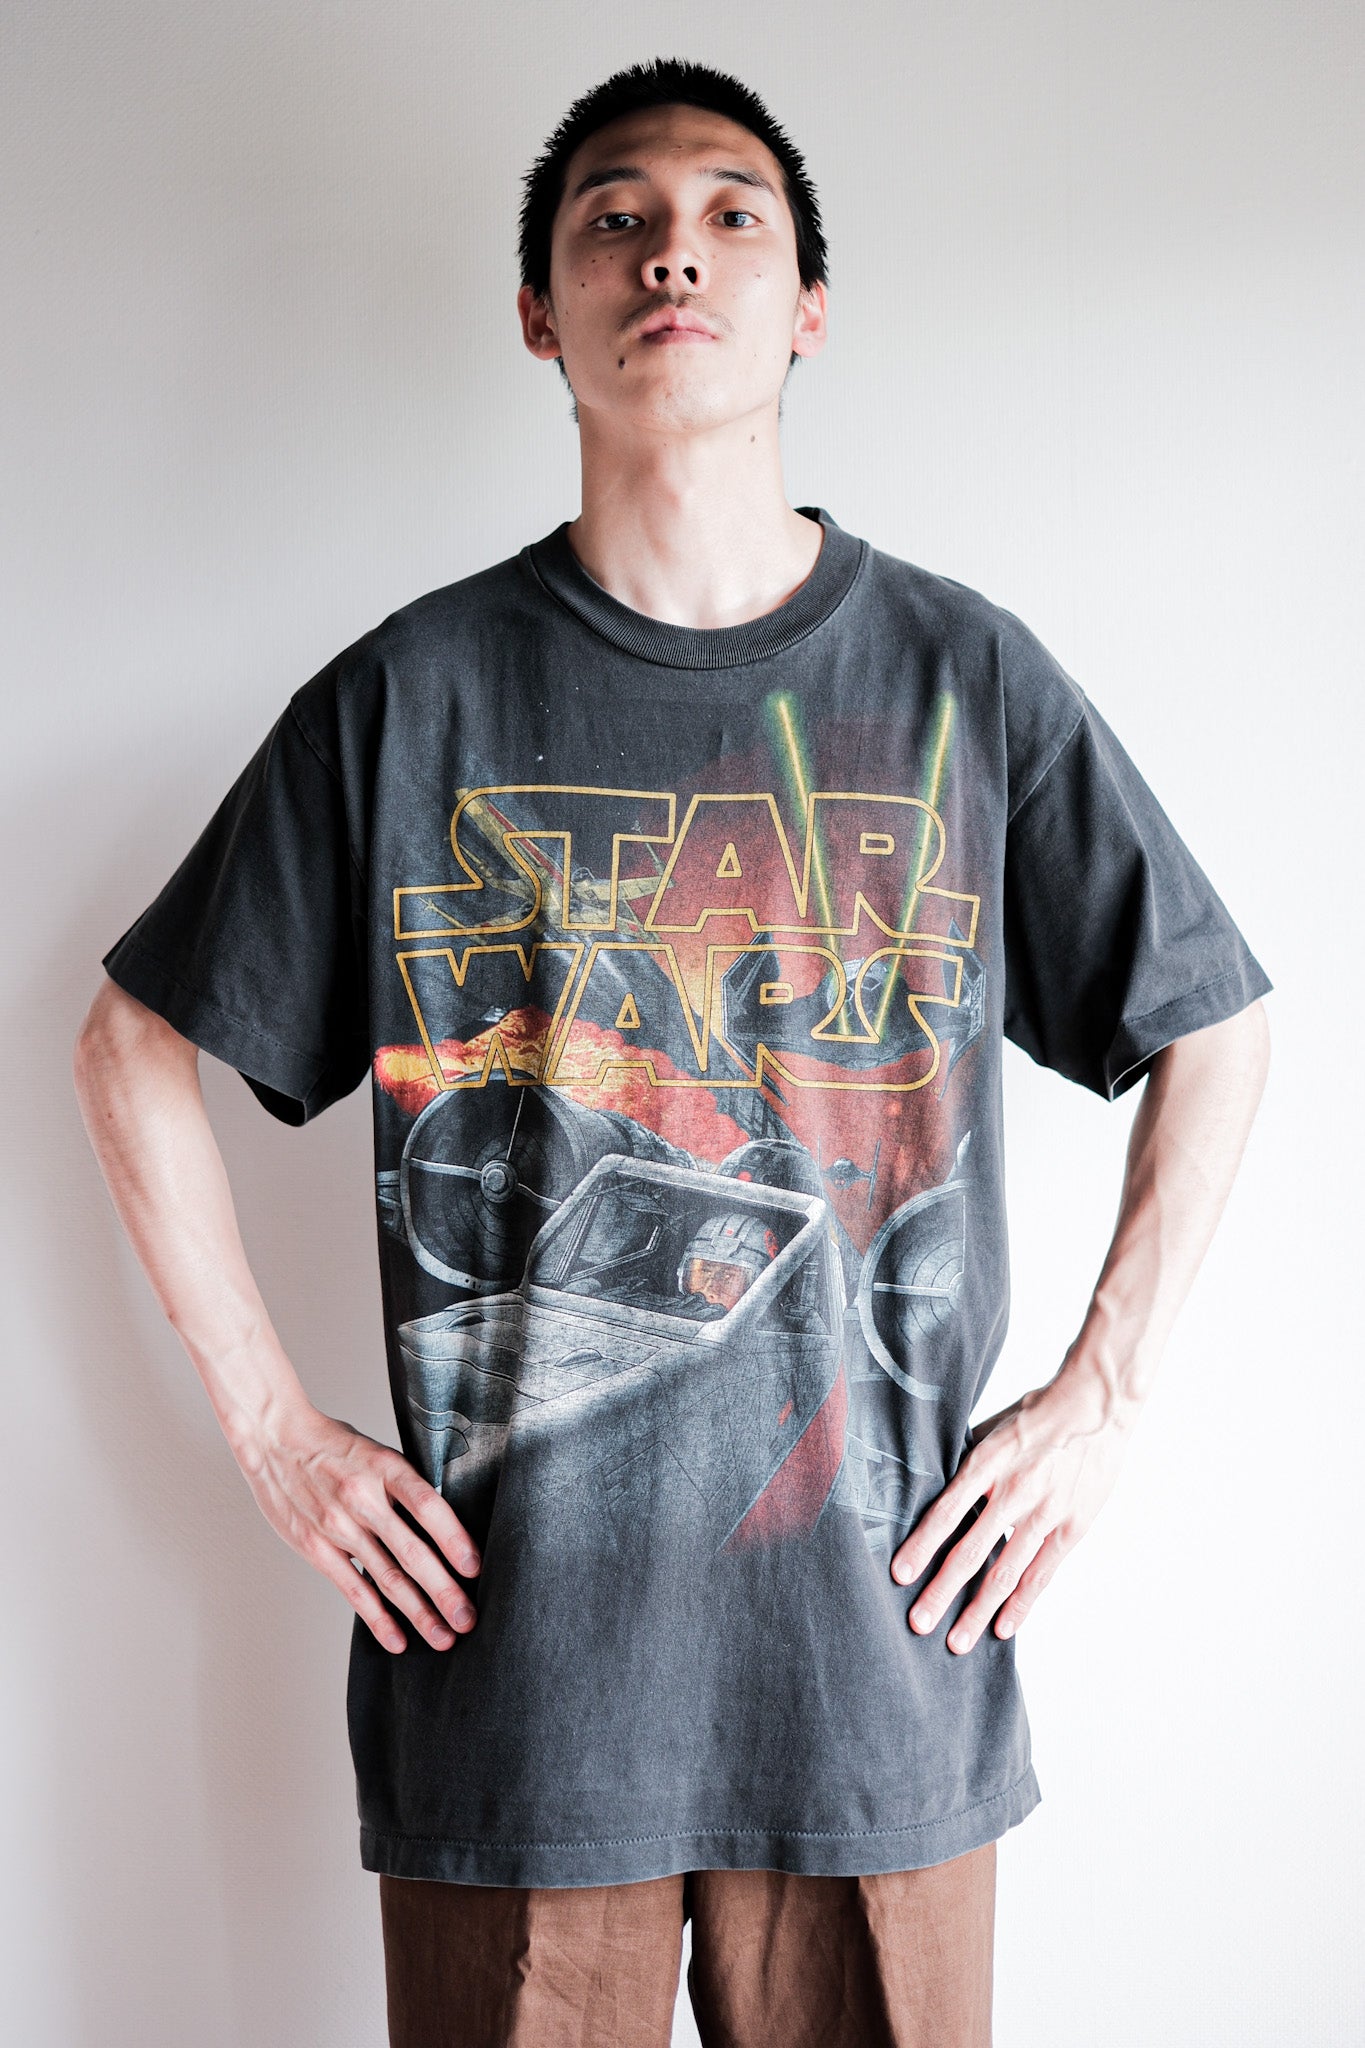 [~ 90's] เสื้อยืดพิมพ์ภาพยนตร์วินเทจขนาดเสื้อยืด "Star Wars" "Made in US.A. "